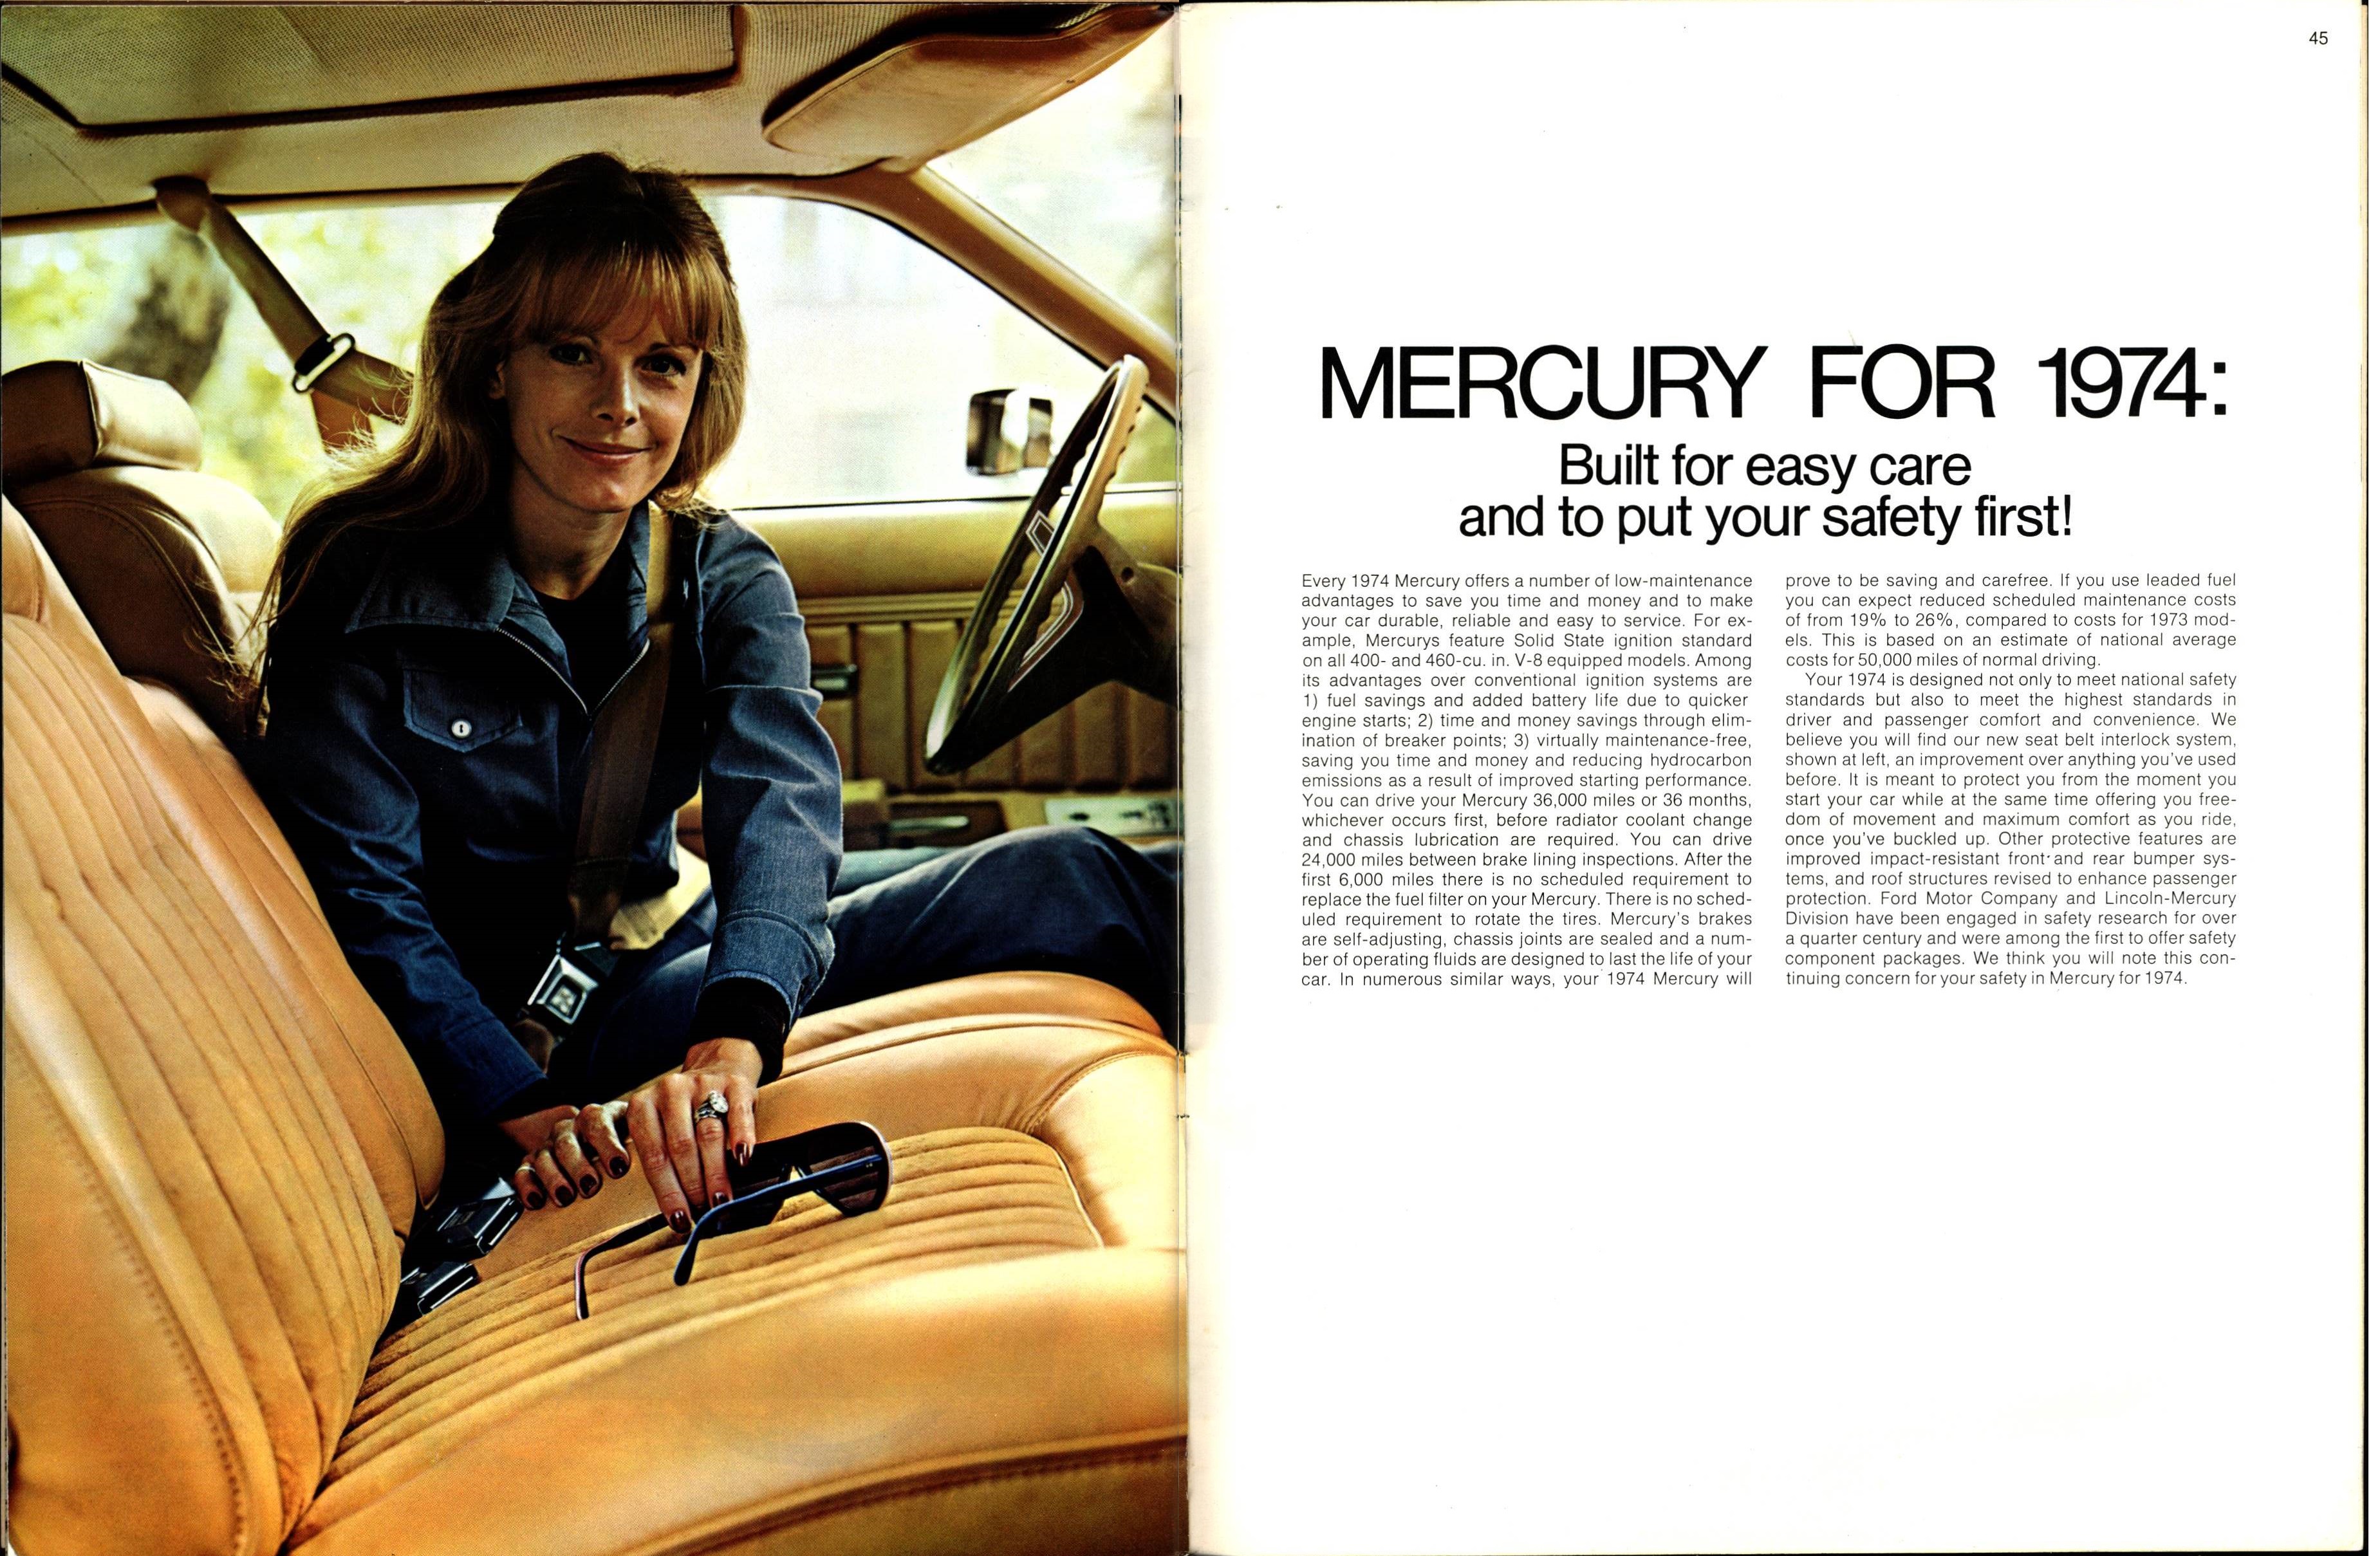 1974 Mercury Full Line Brochure 44-45